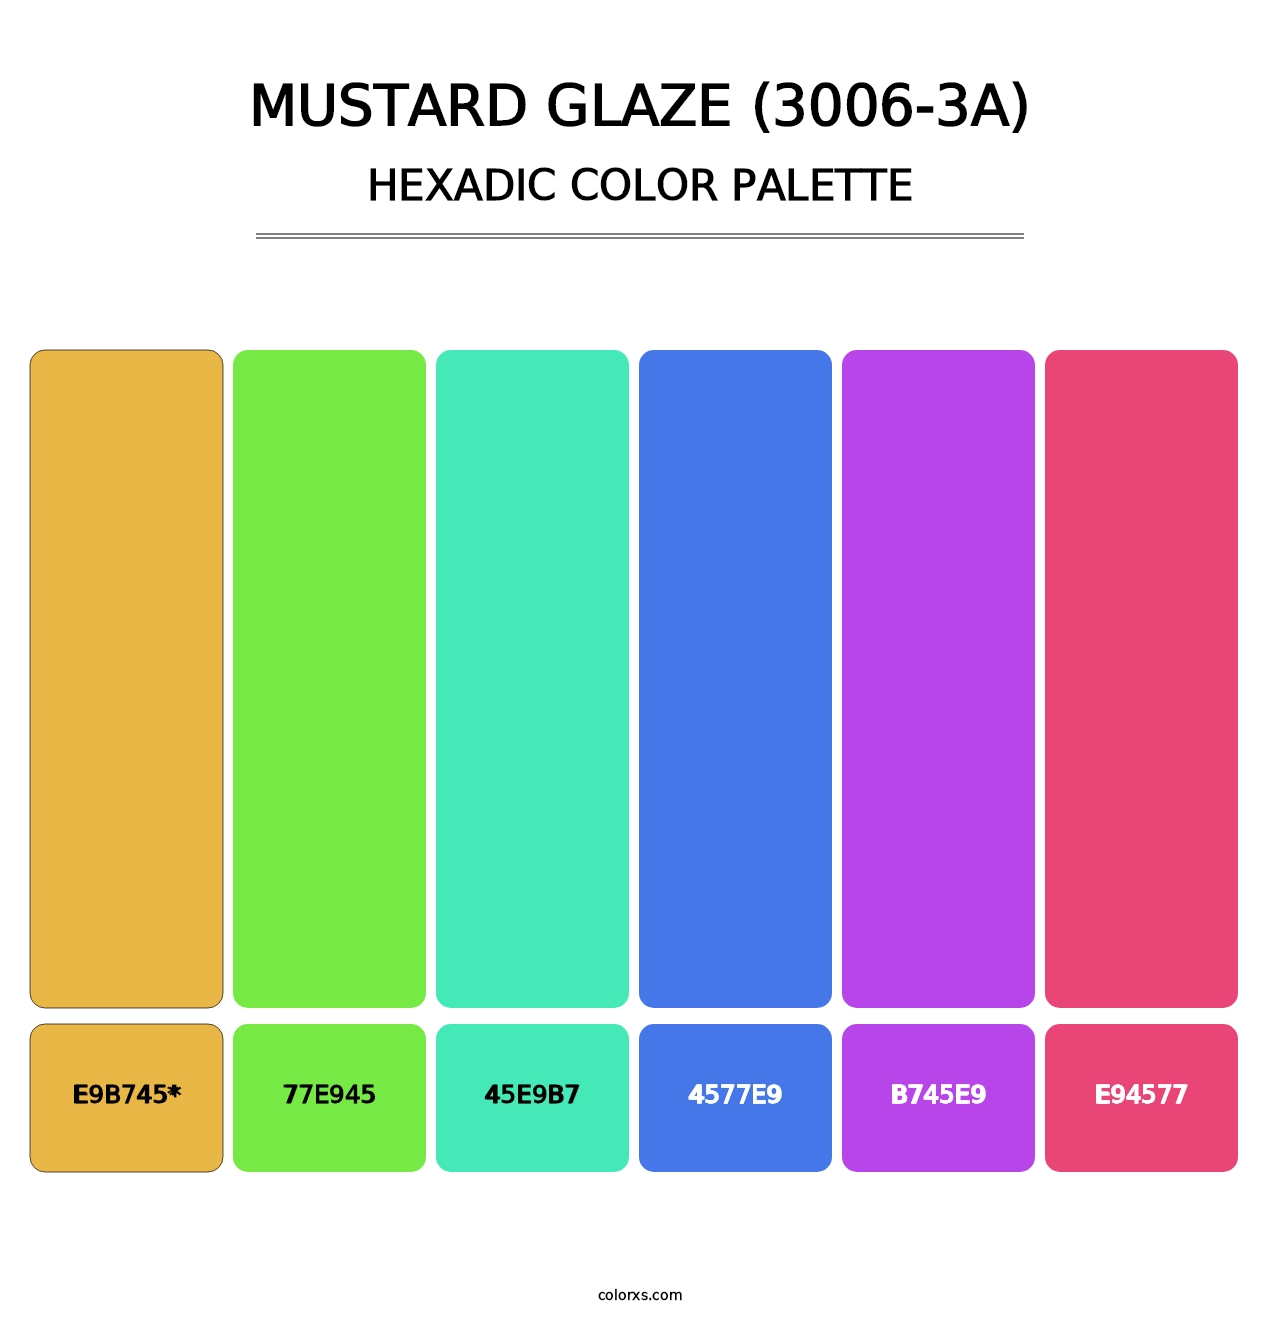 Mustard Glaze (3006-3A) - Hexadic Color Palette